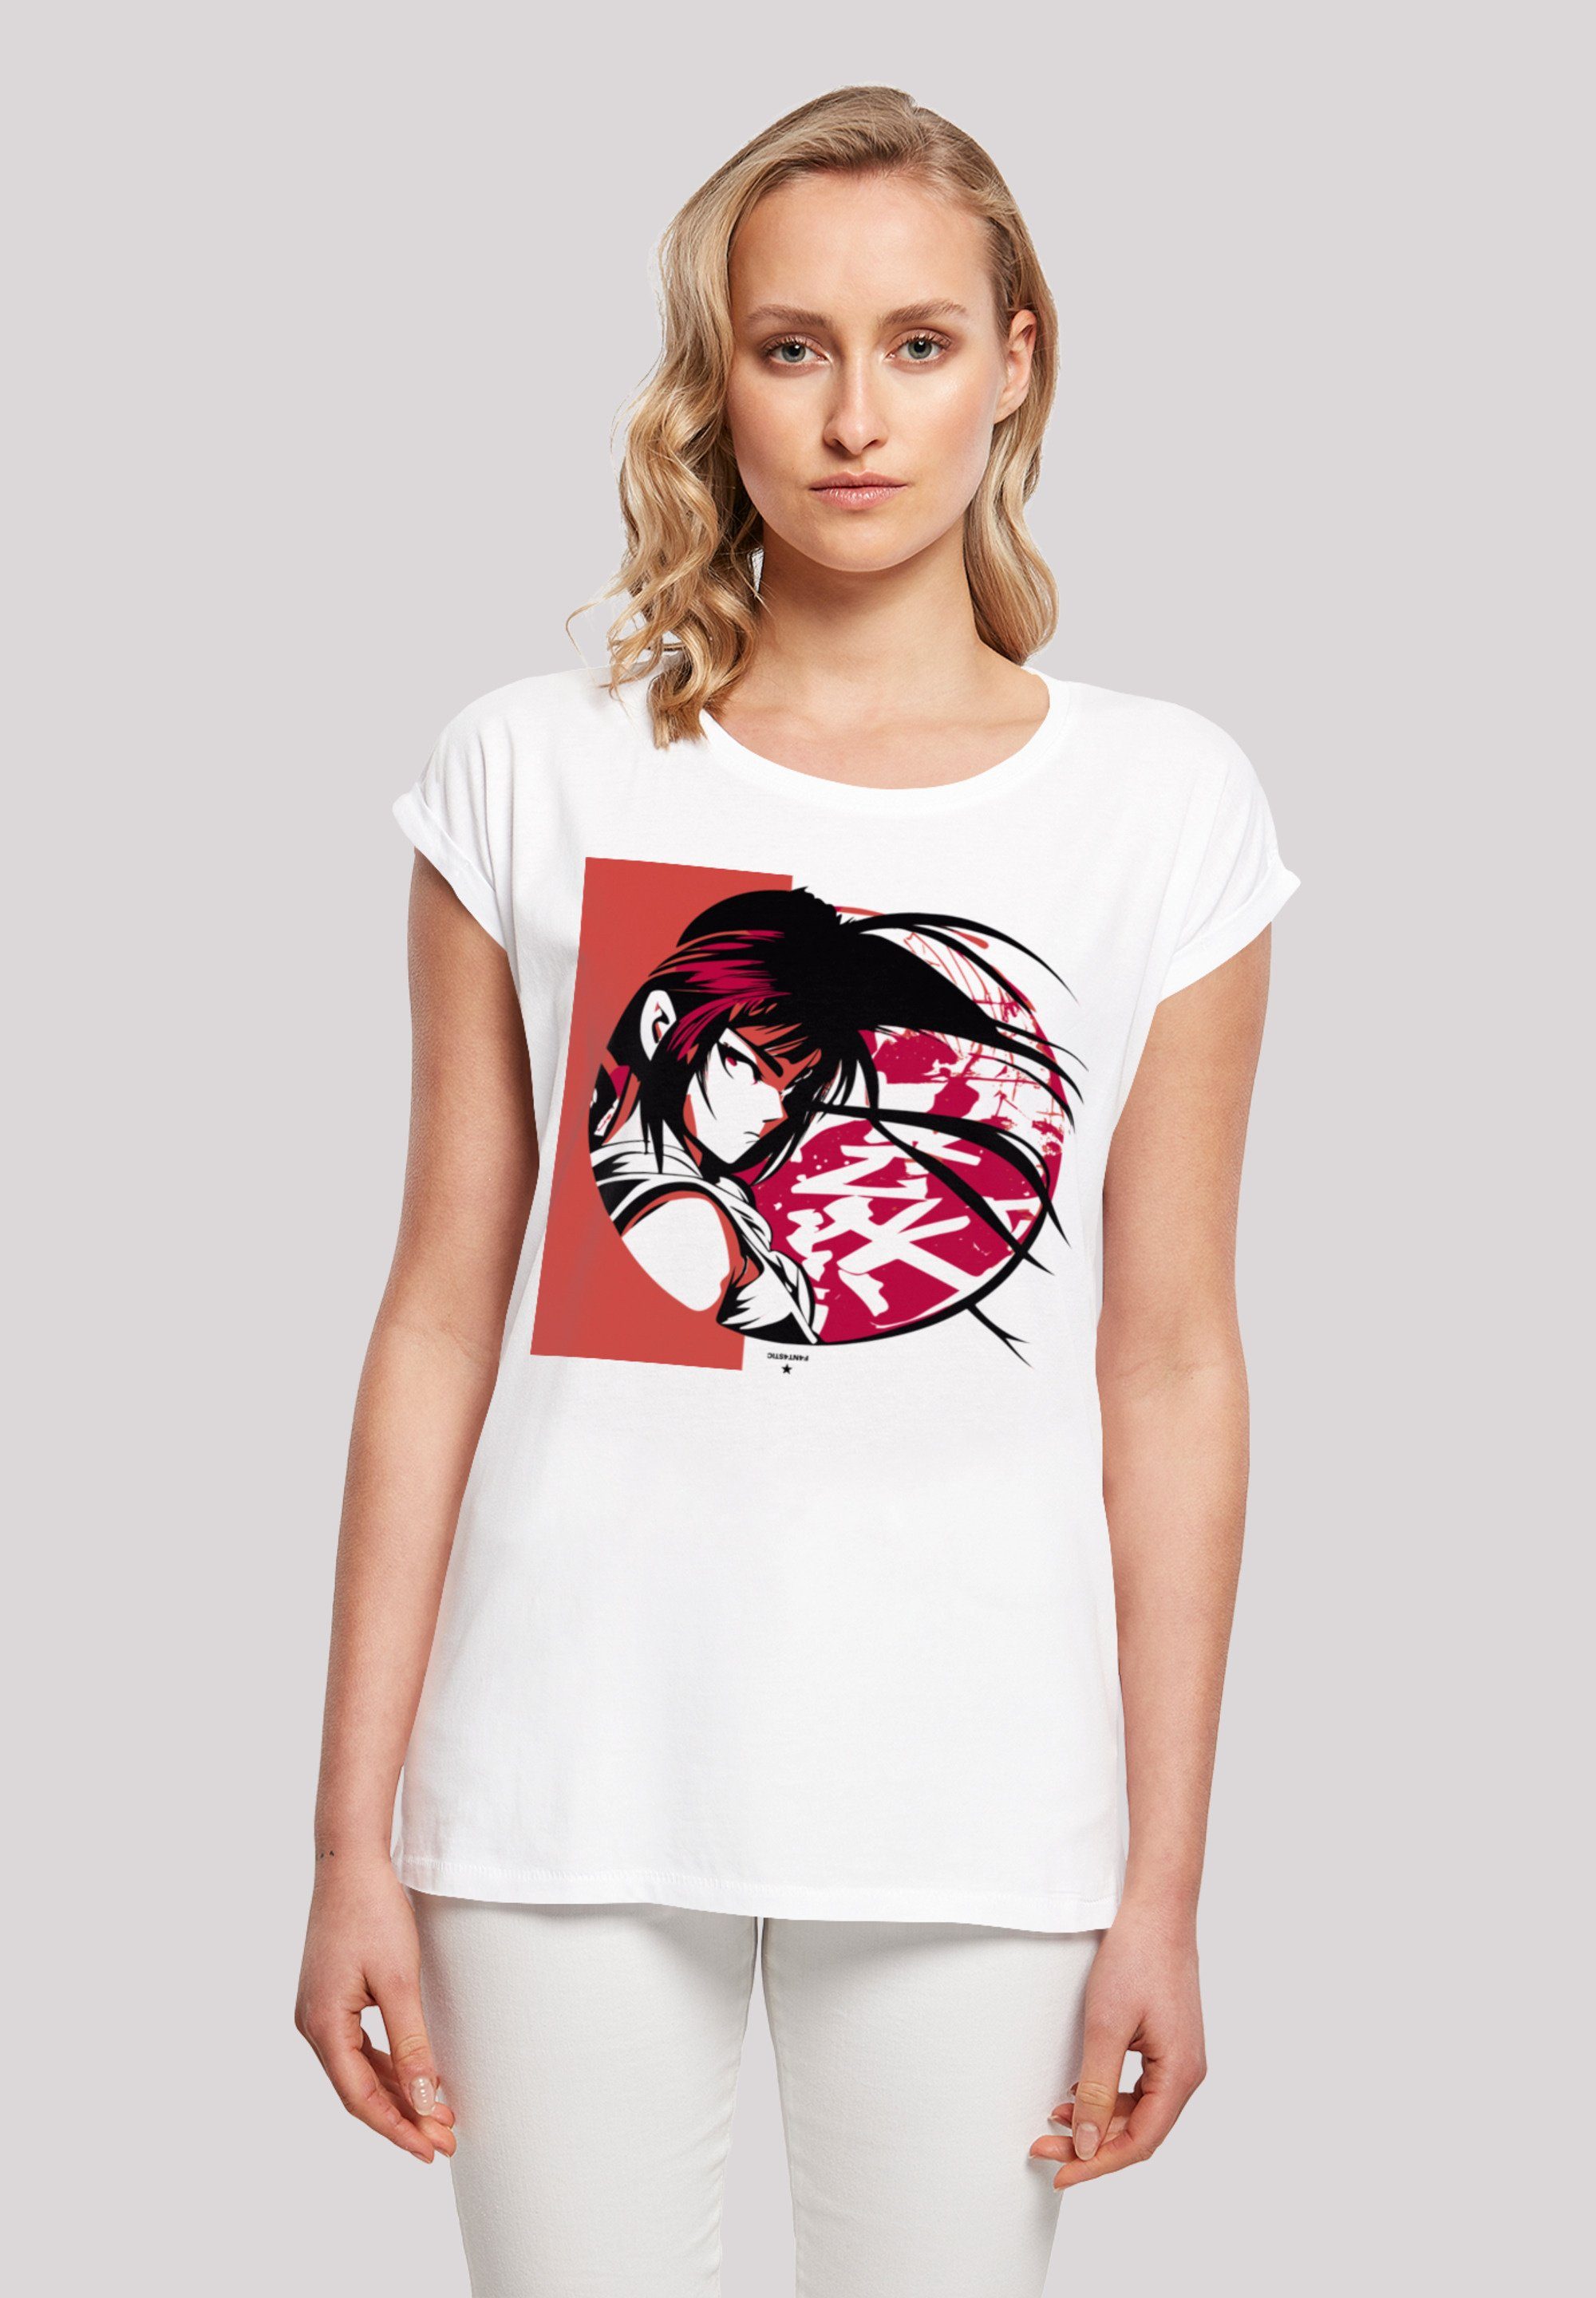 F4NT4STIC T-Shirt Manga Girl Japan M ist trägt Größe und Das cm 170 groß Model Print